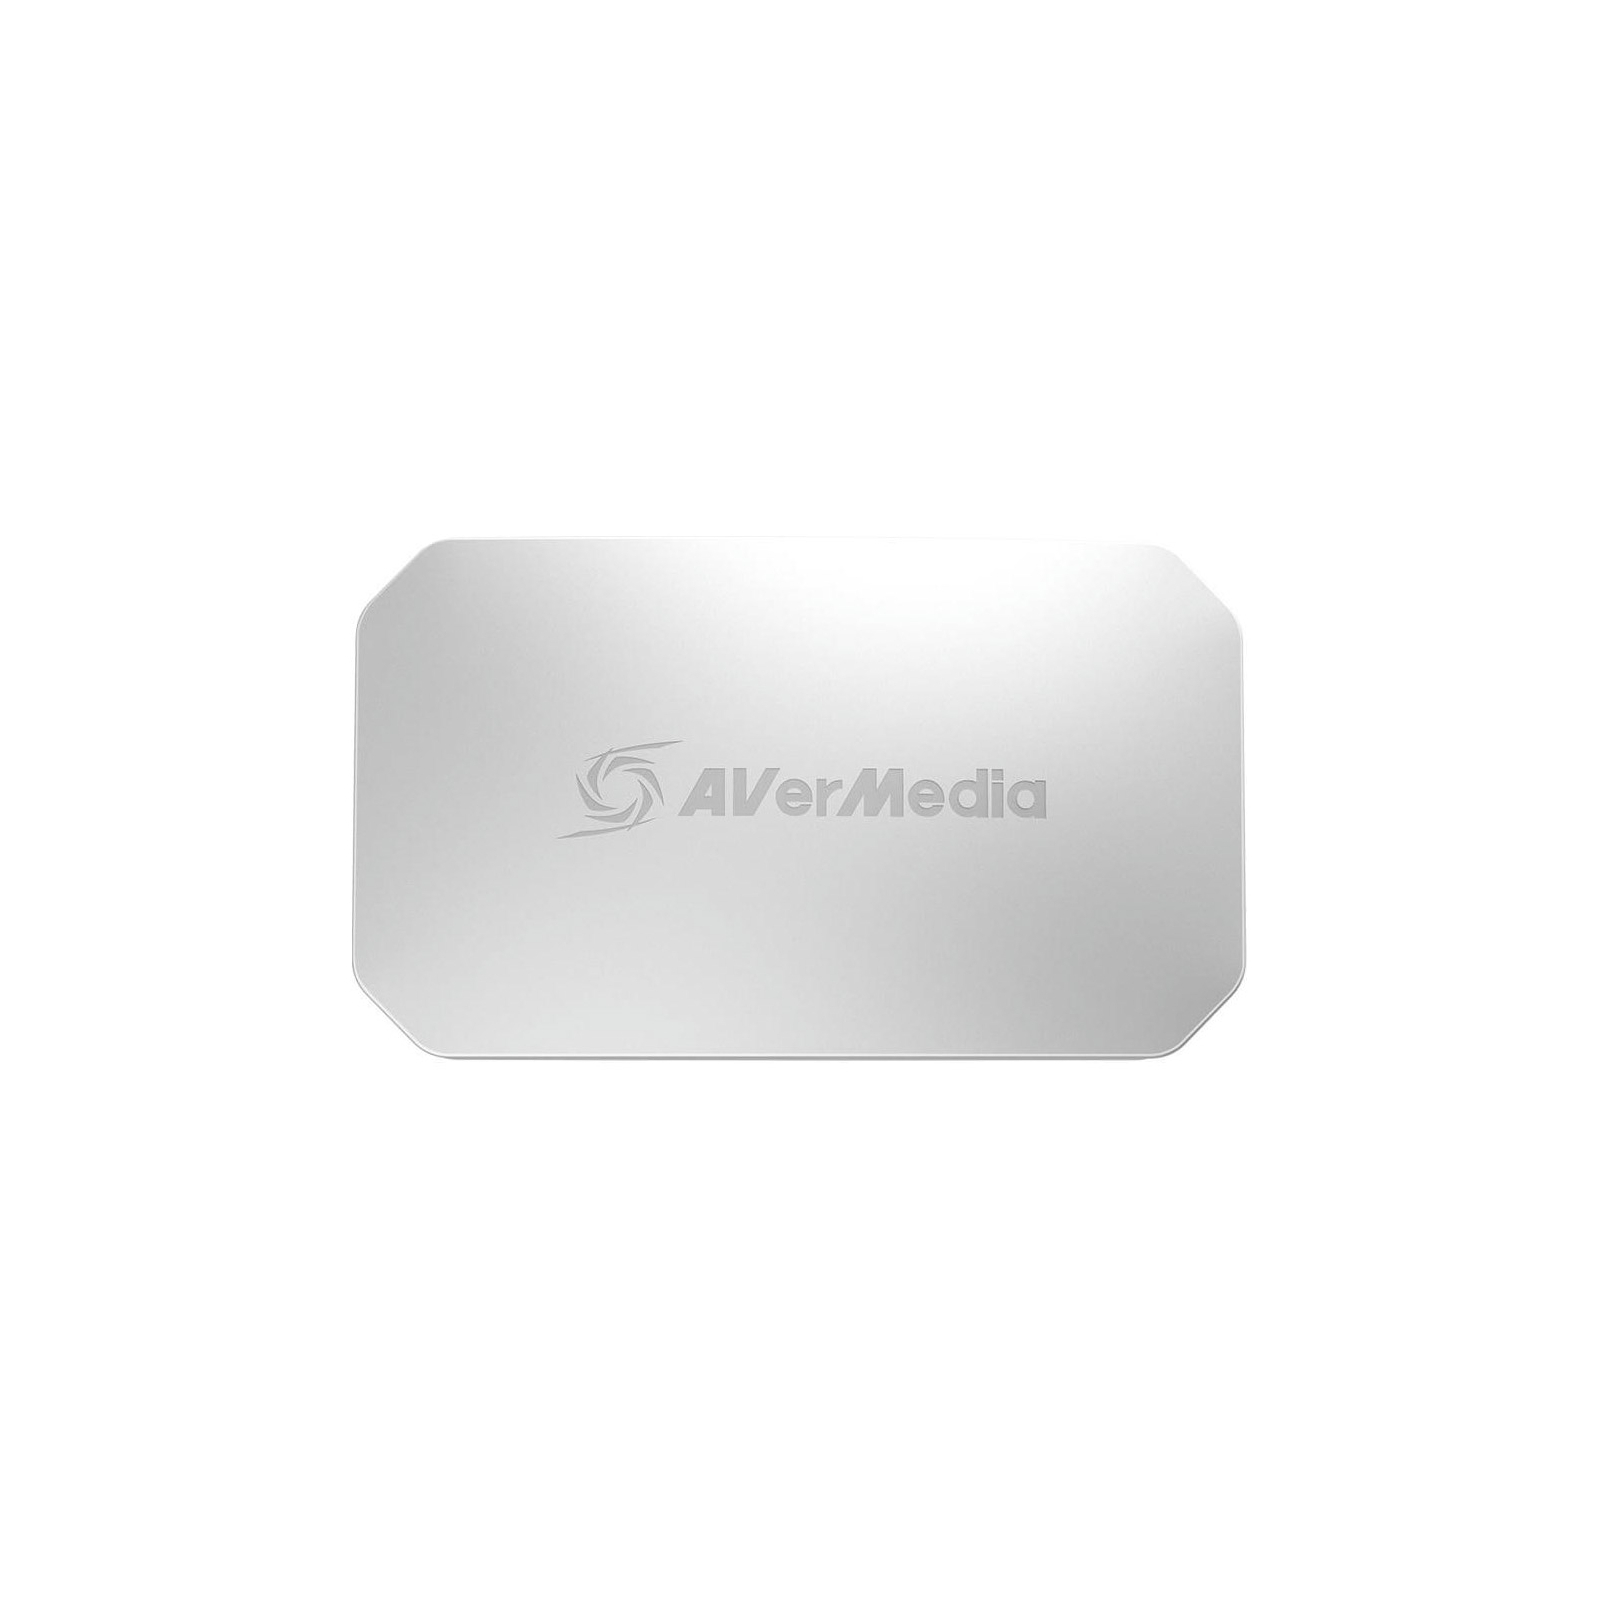 Устройство захвата видео AVerMedia GC553G2 ULTRA 2.1 RGB, 2160p144(pass-trought), 2160p60(record) (61GC553G20BW) изображение 5